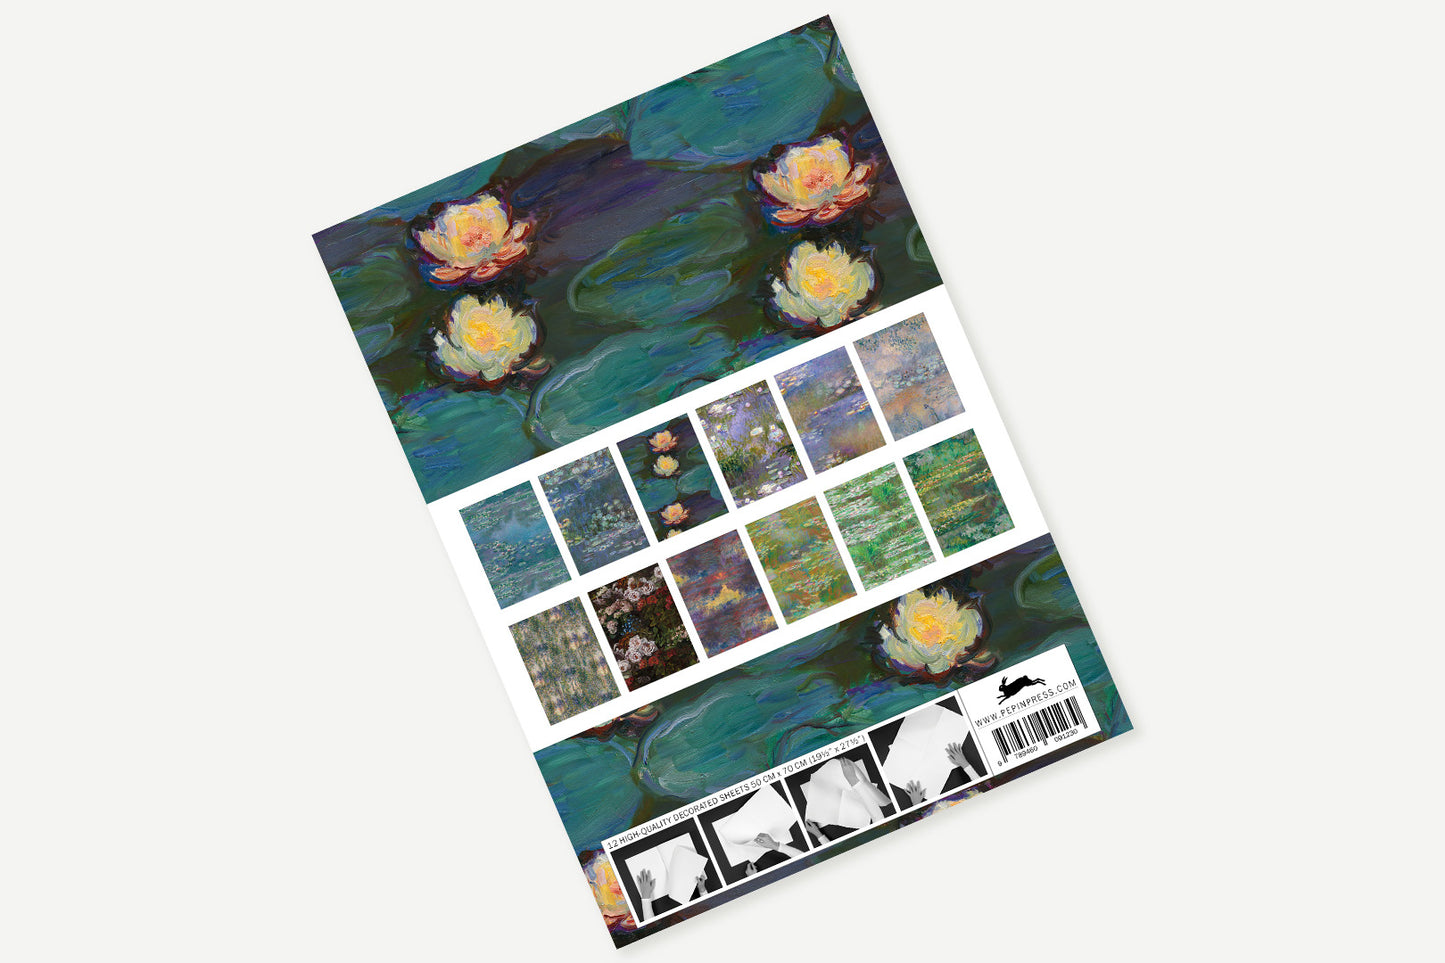 Pepin Press Gift & Creative Papers Book - Claude Monet | Flywheel | Stationery | Tasmania